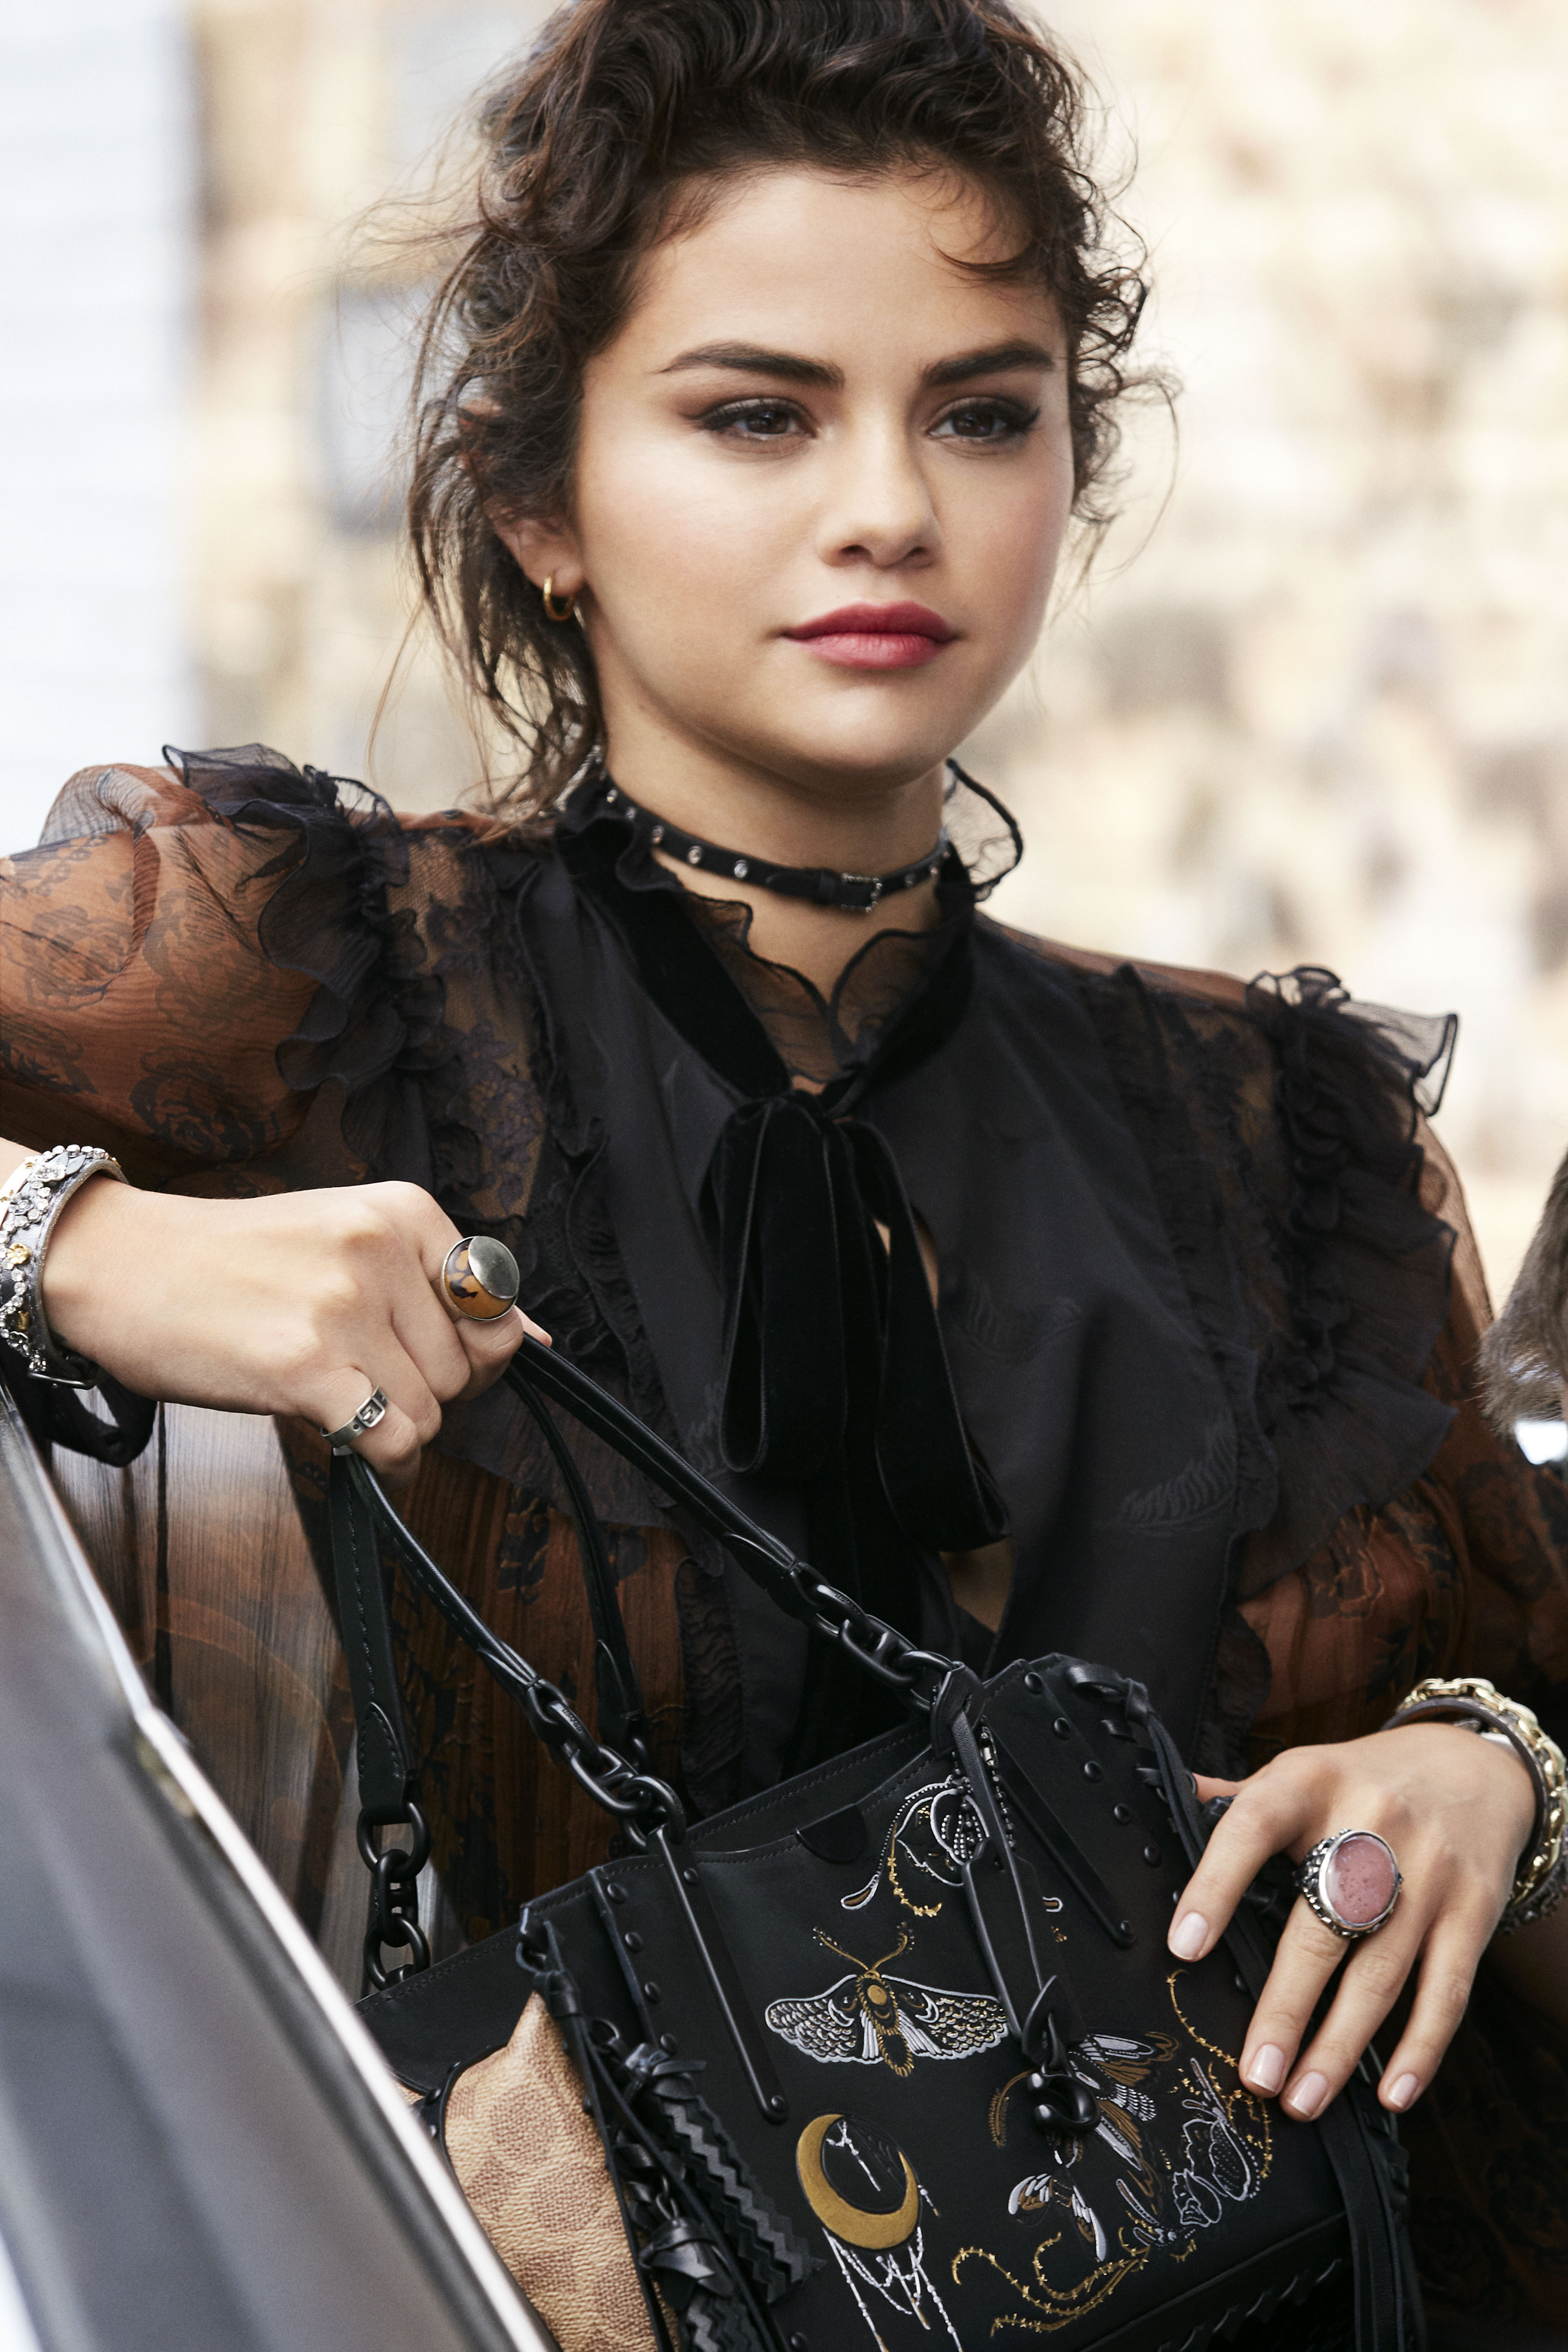 Selena Gomez Fall 2018 Coach Handbag Clothing Campaign Pics